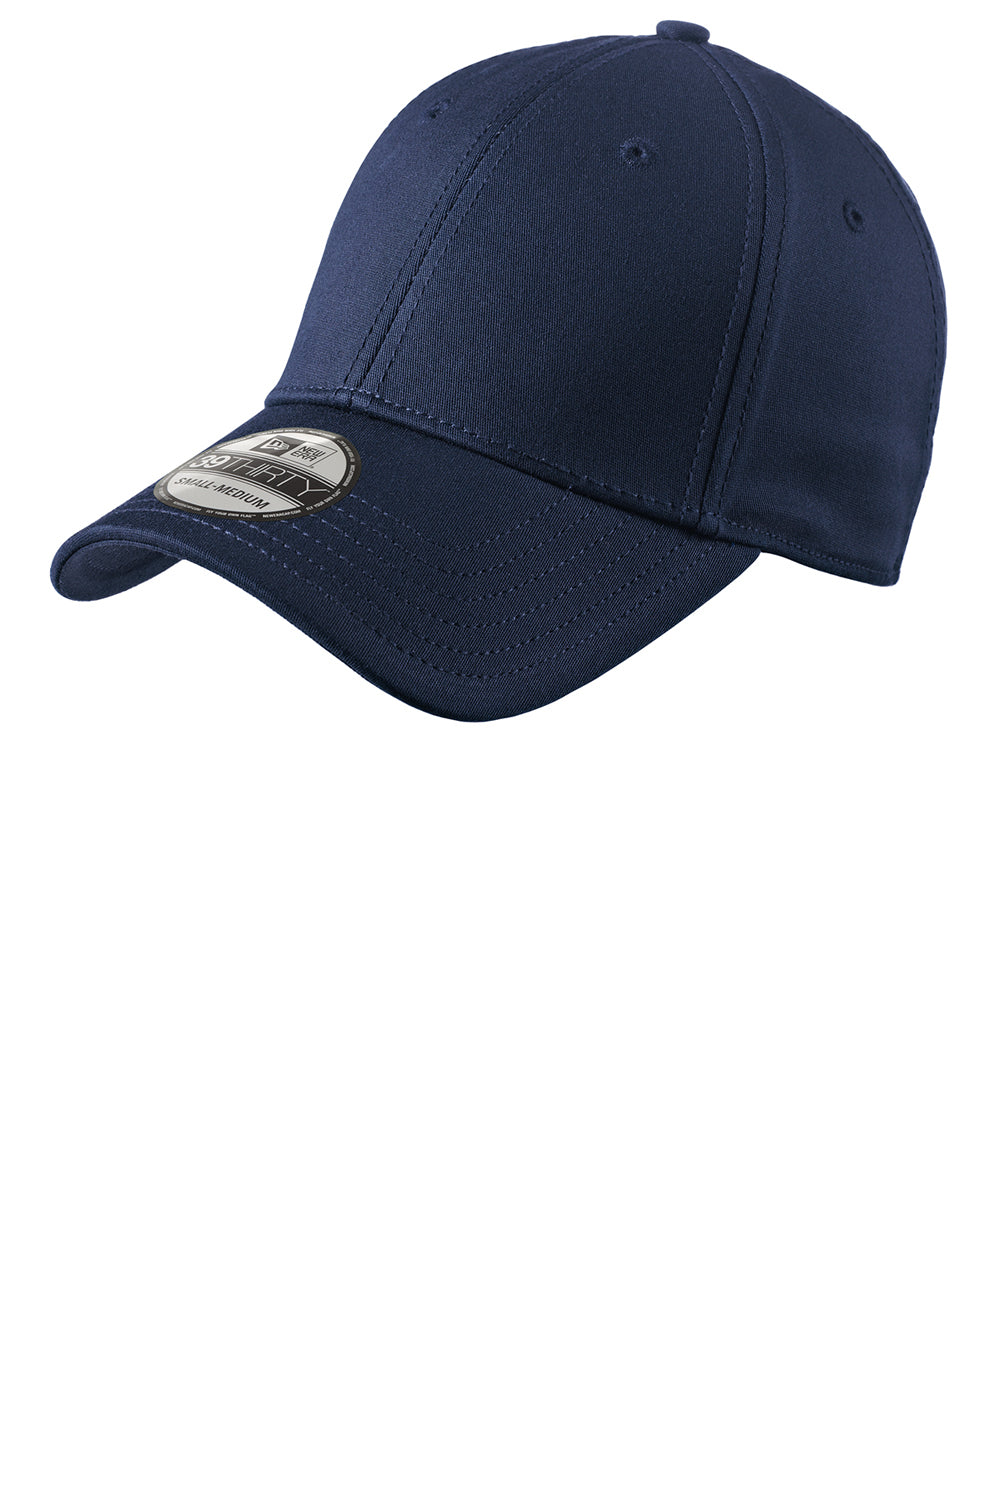 New Era NE1000 Mens Stretch Fit Hat Navy Blue Front